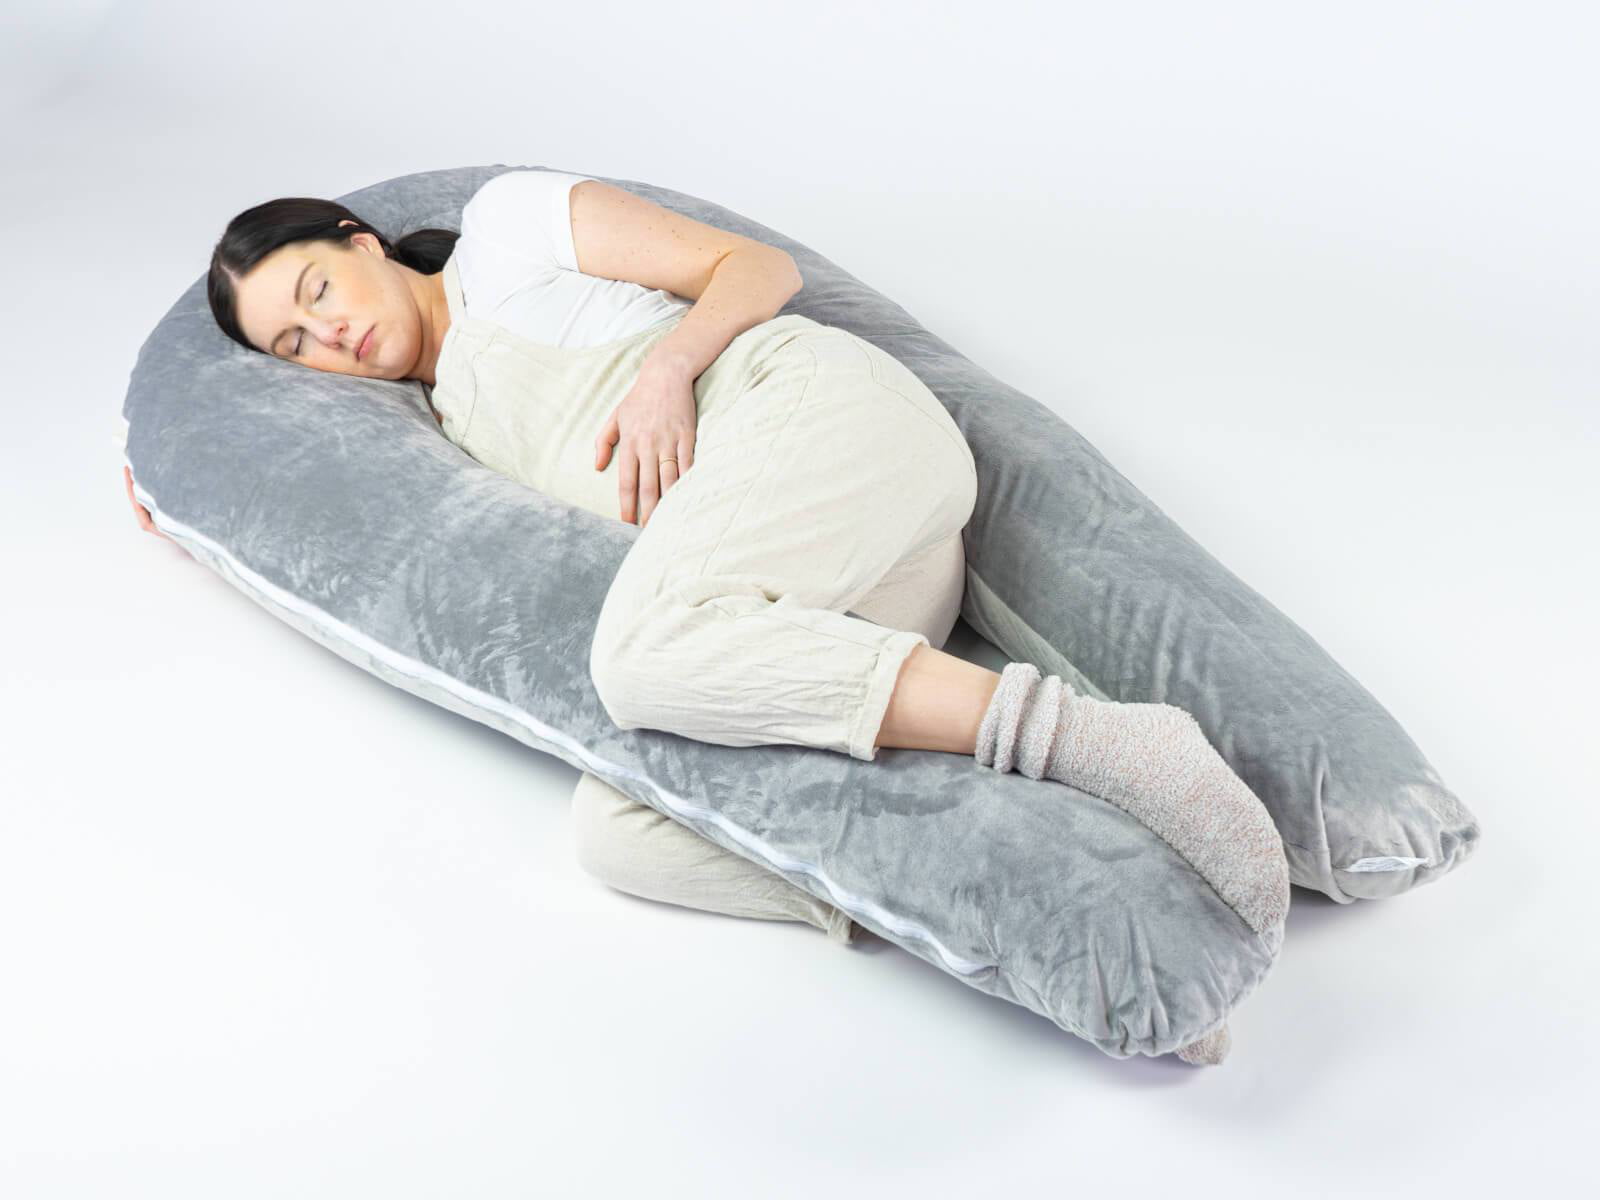 New Moonlight Slumber Comfort-U Total Body Support Pillow Full Adult Size 